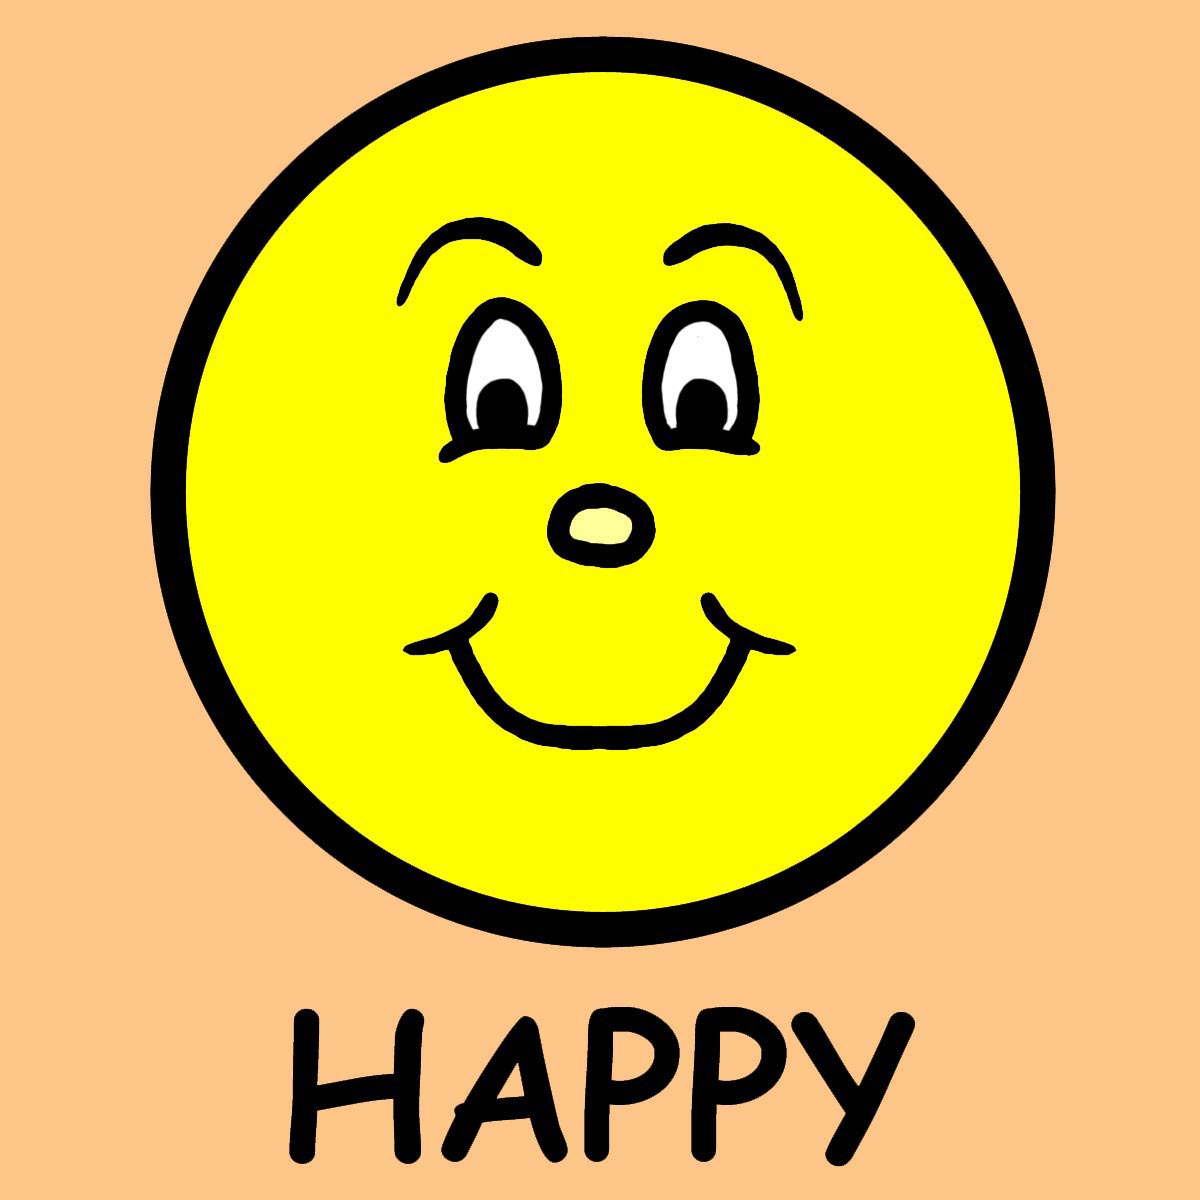 free clipart happy person - photo #16